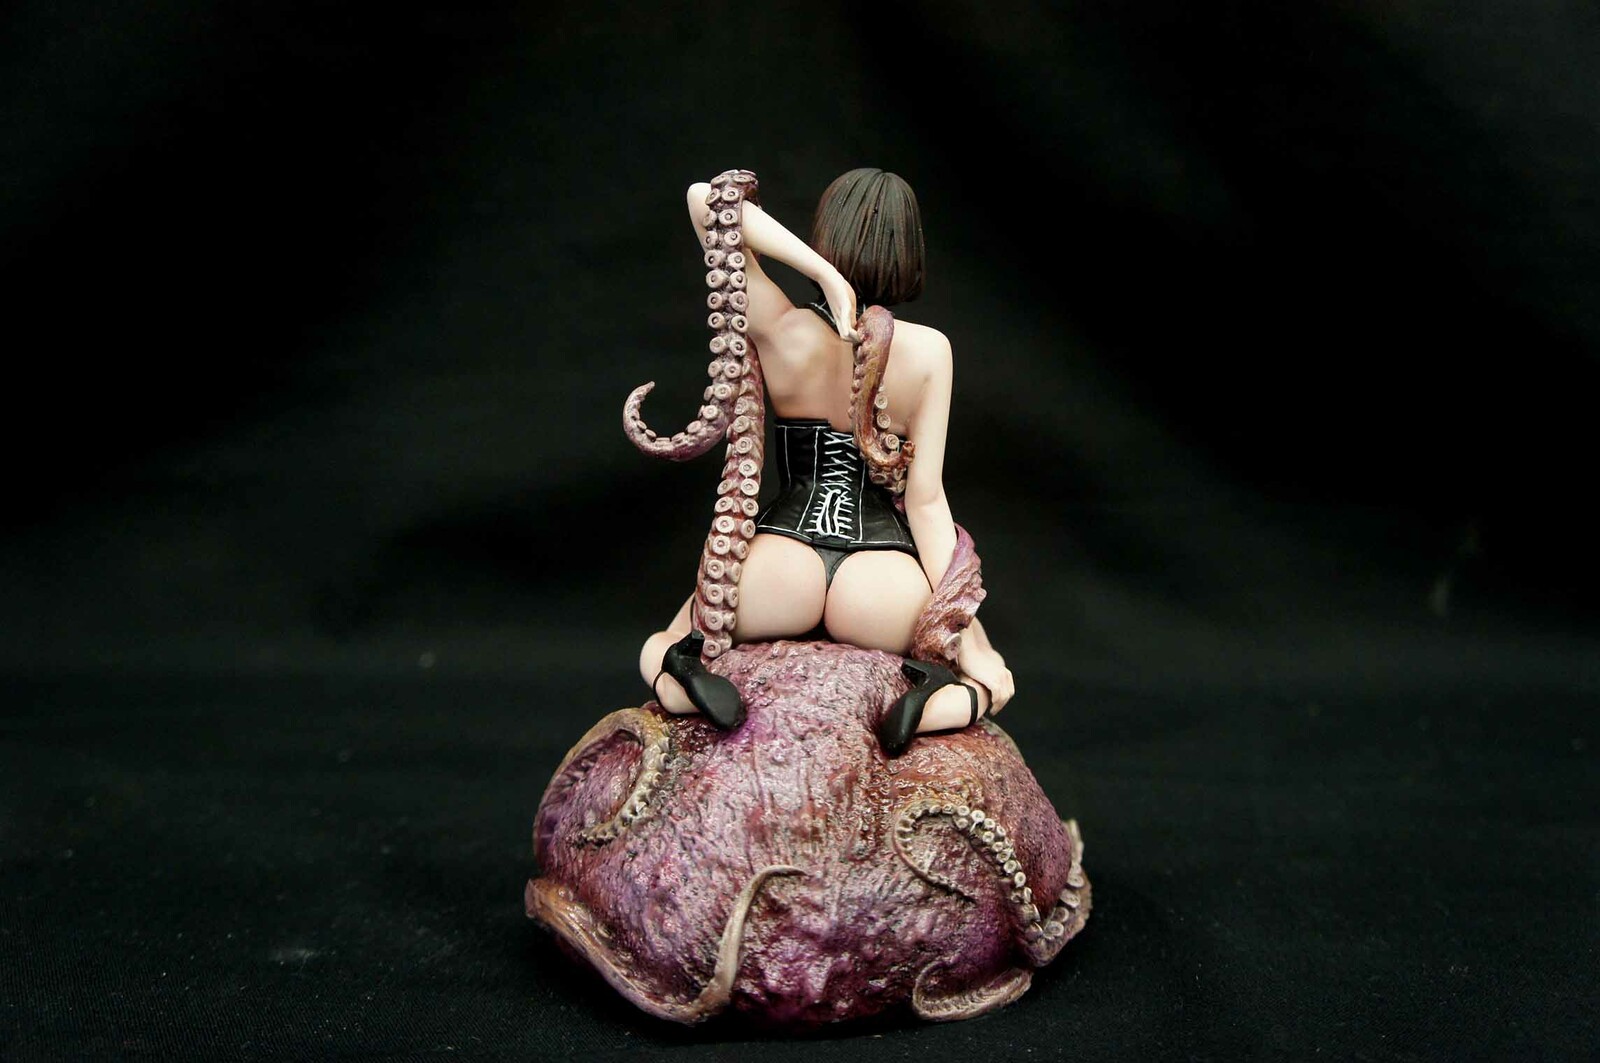 Octopus Girl Art Statue 章魚少女
https://www.solidart.club/